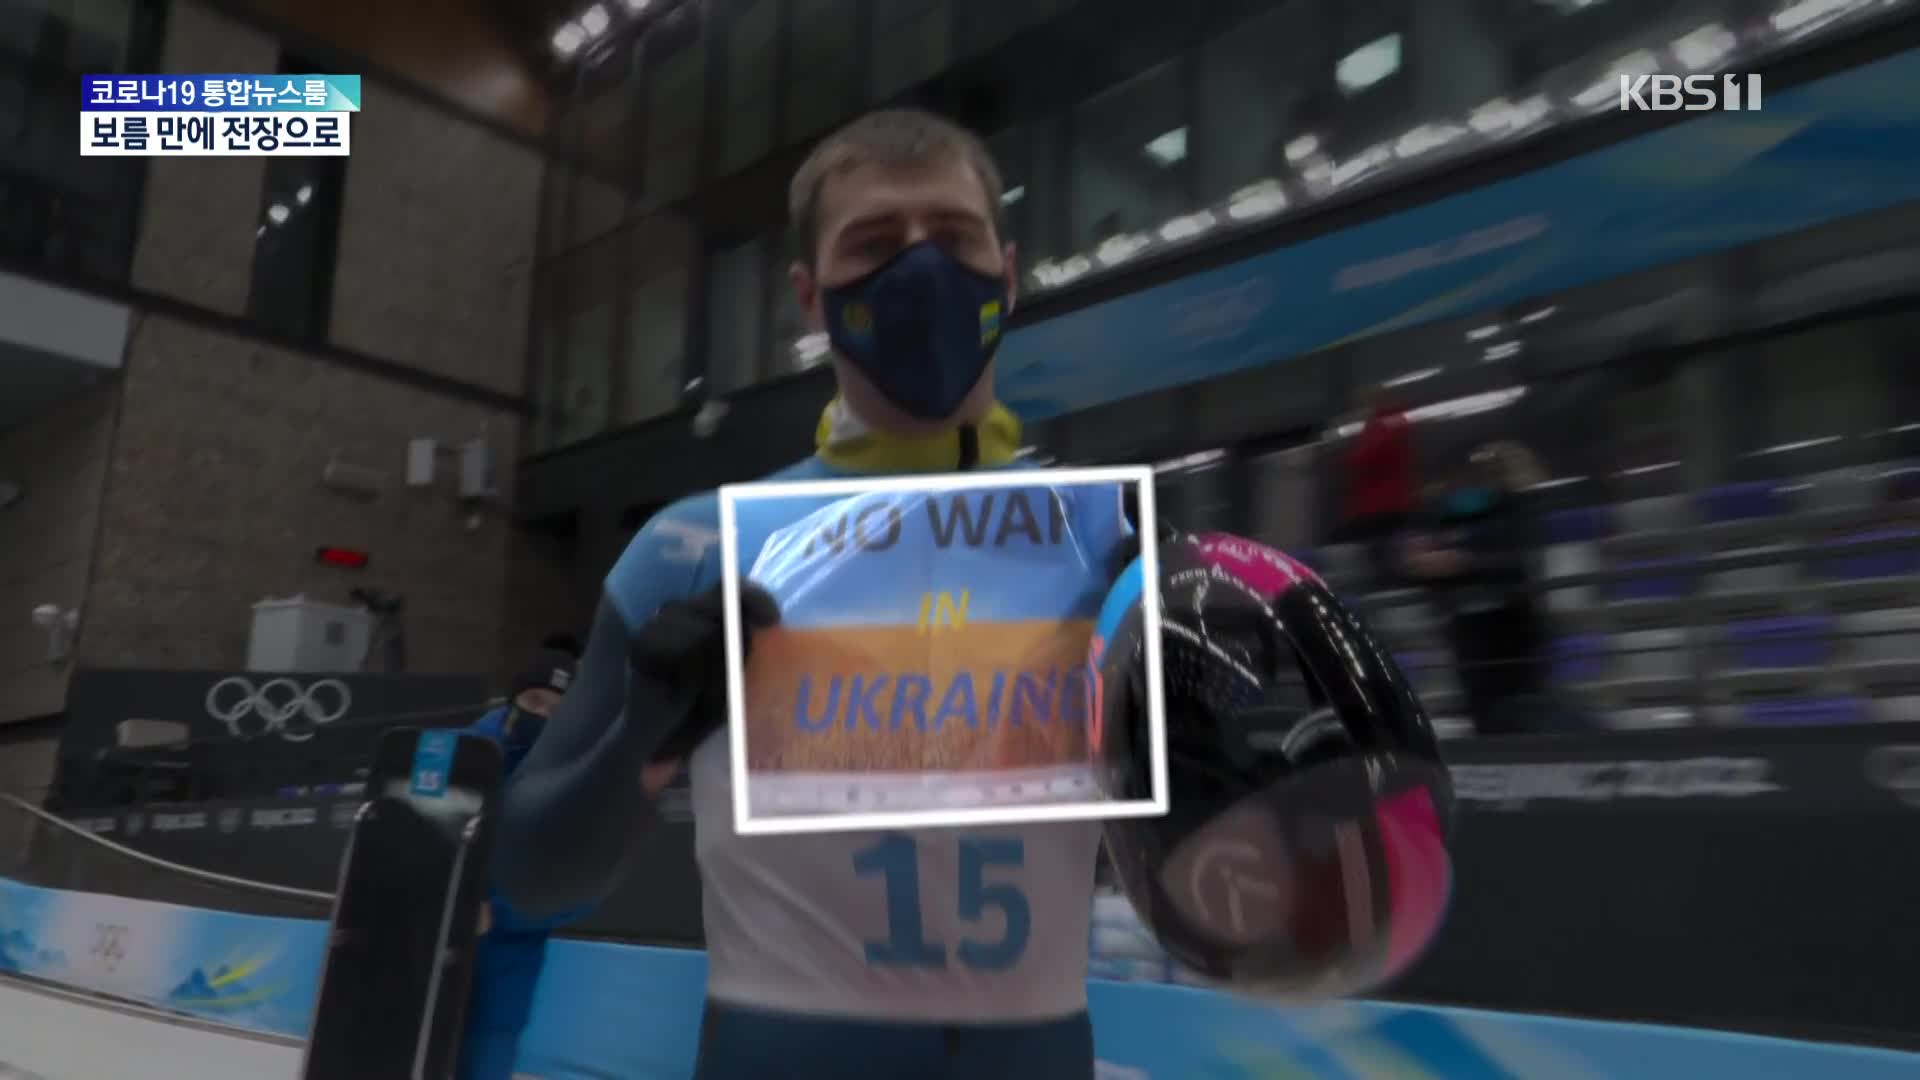 ‘NO WAR’ 외쳤던 우크라이나 선수, 보름 만에 전장으로